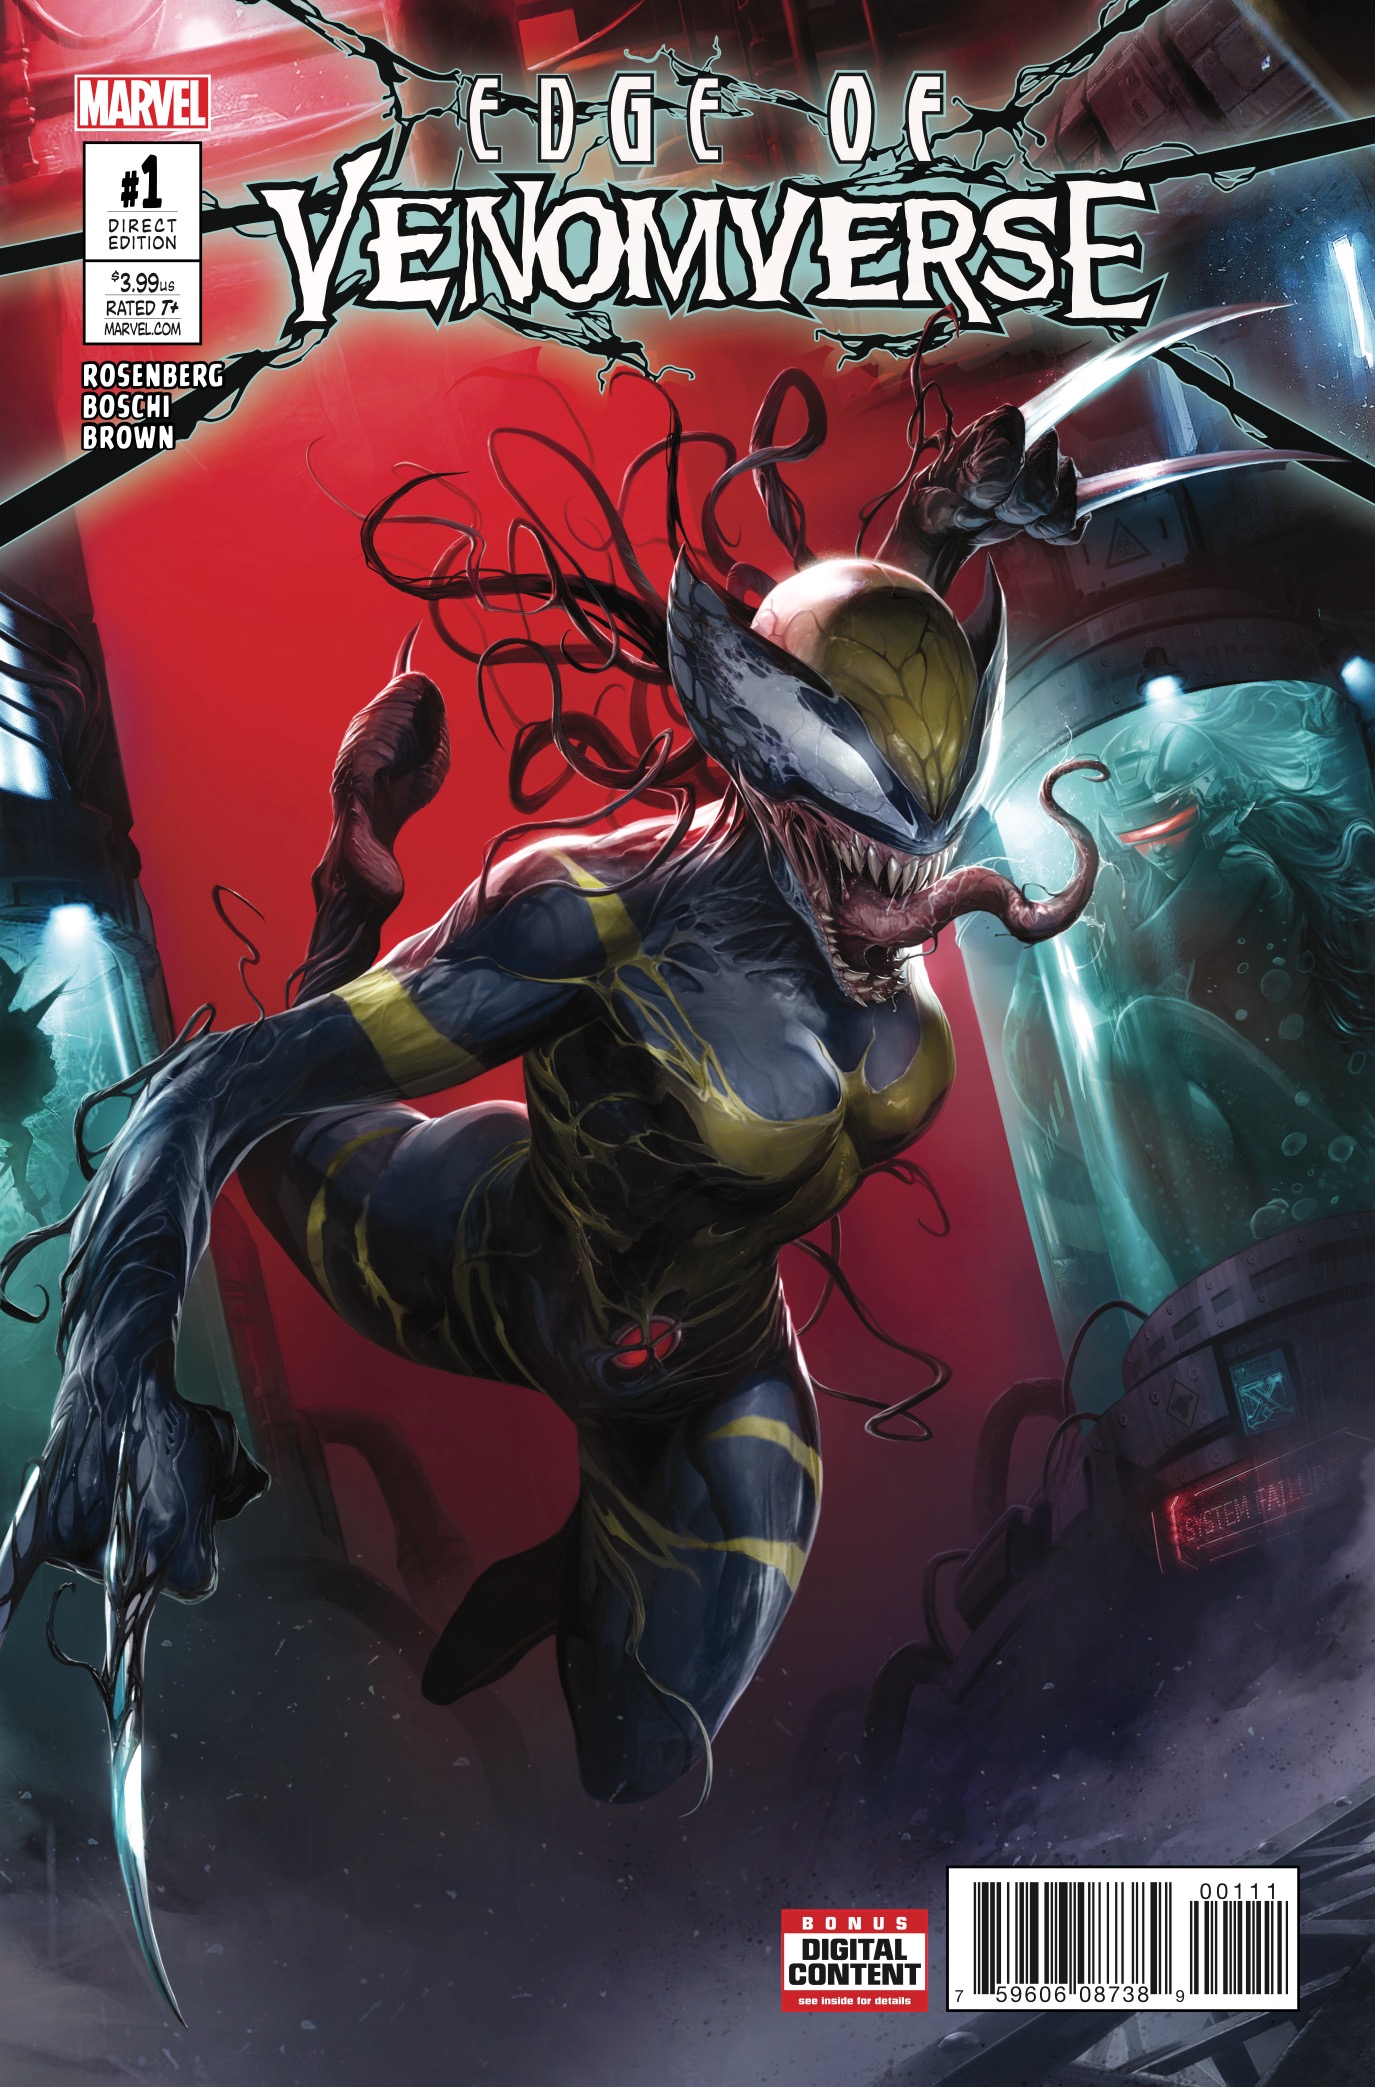 Edge of Venomverse #1 Review